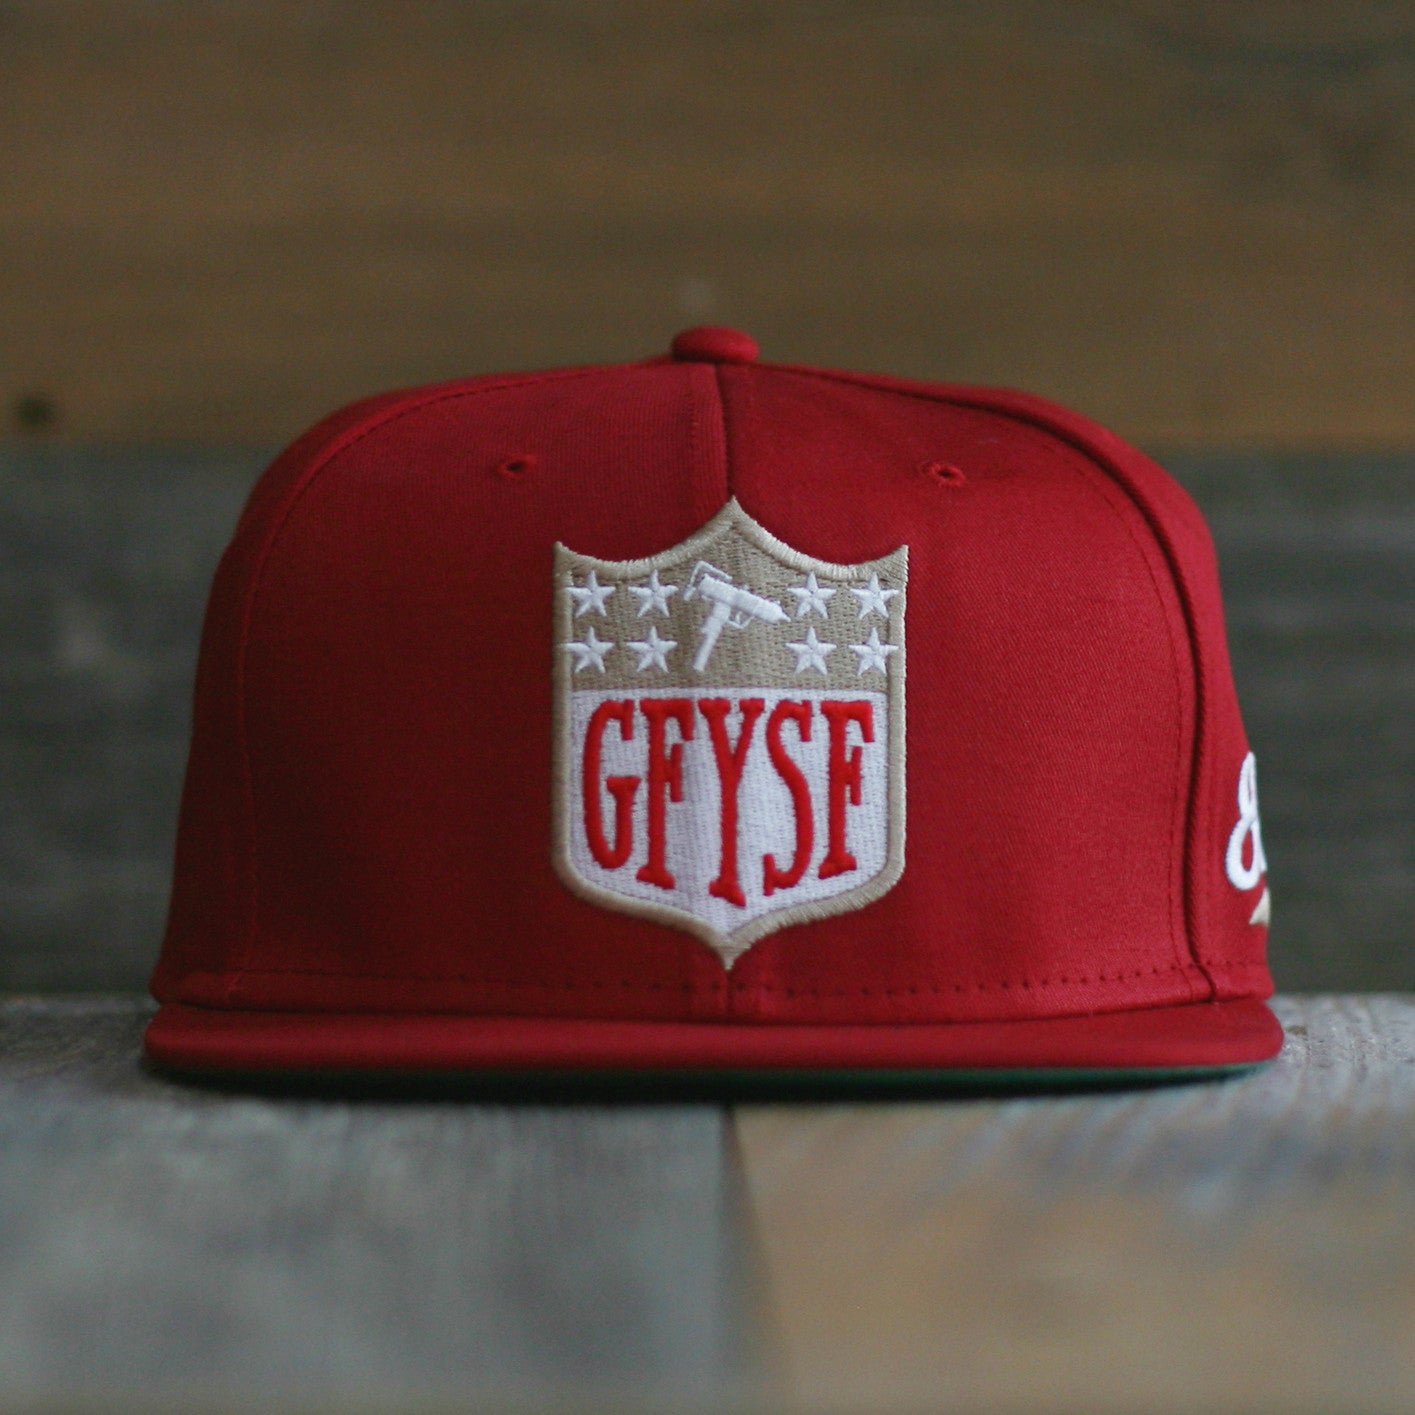 GFYSF League Snapback Hat Red